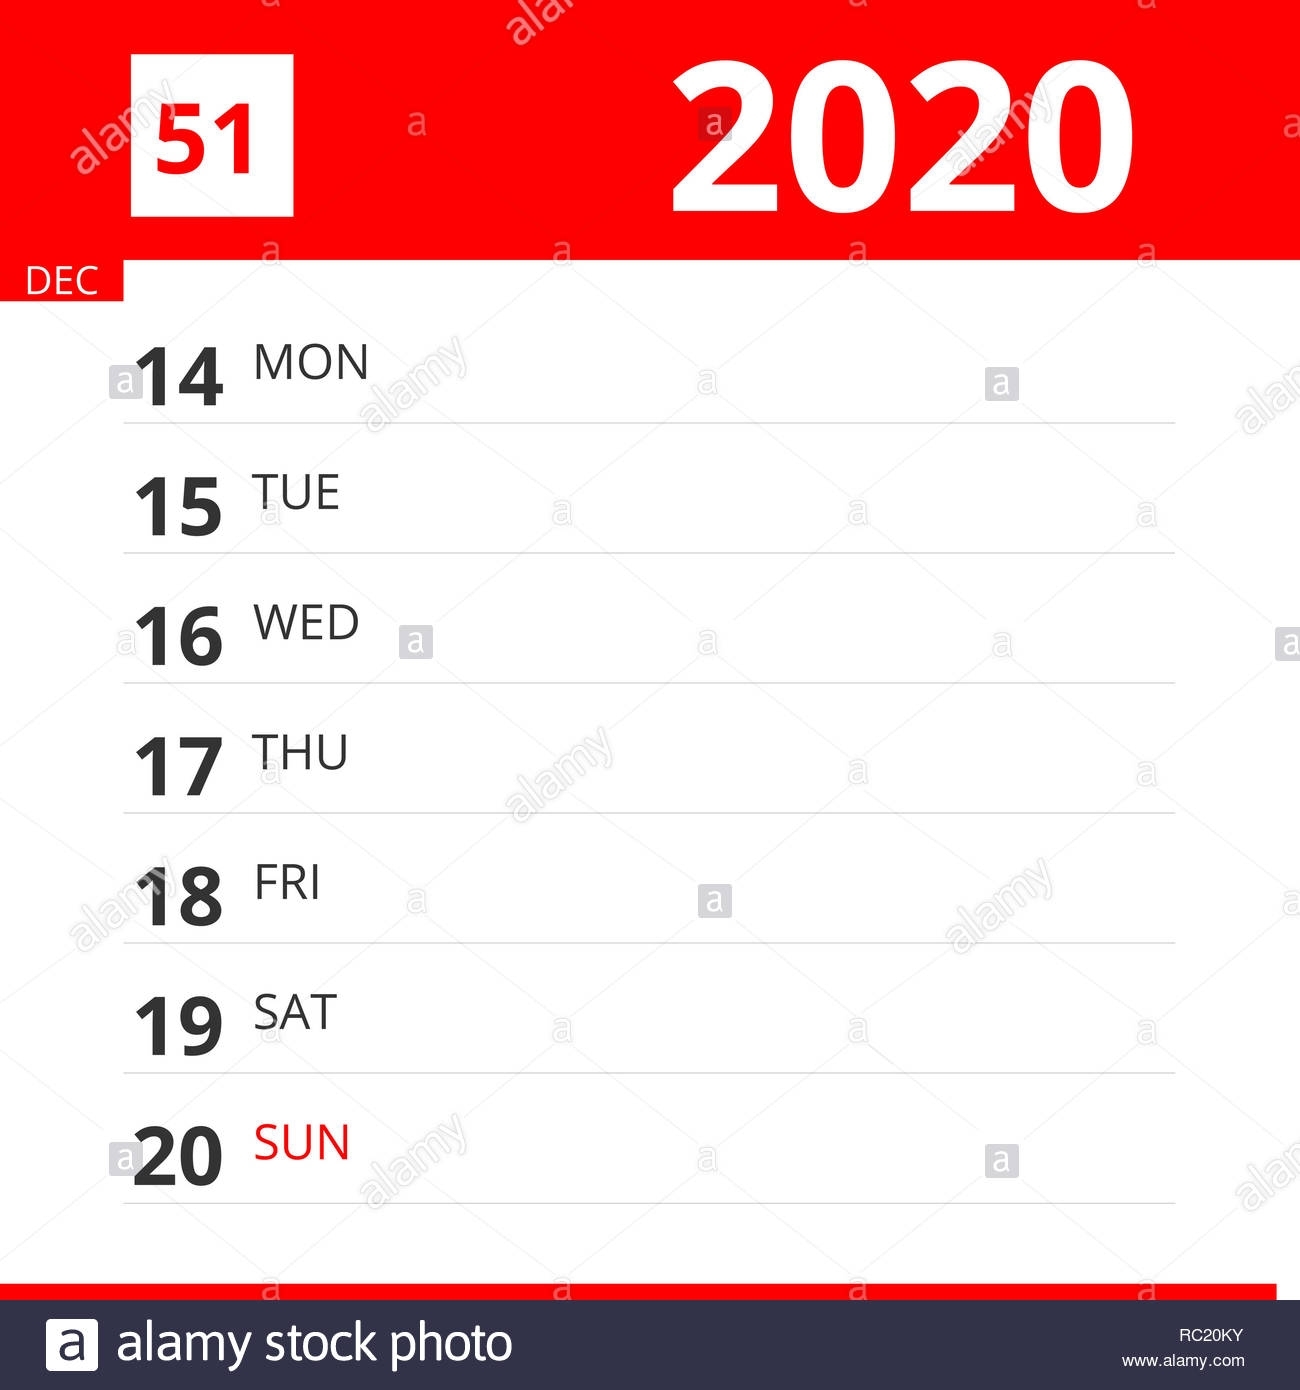 Calendar Planner For Week 51 In 2020, Ends December 20, 2020